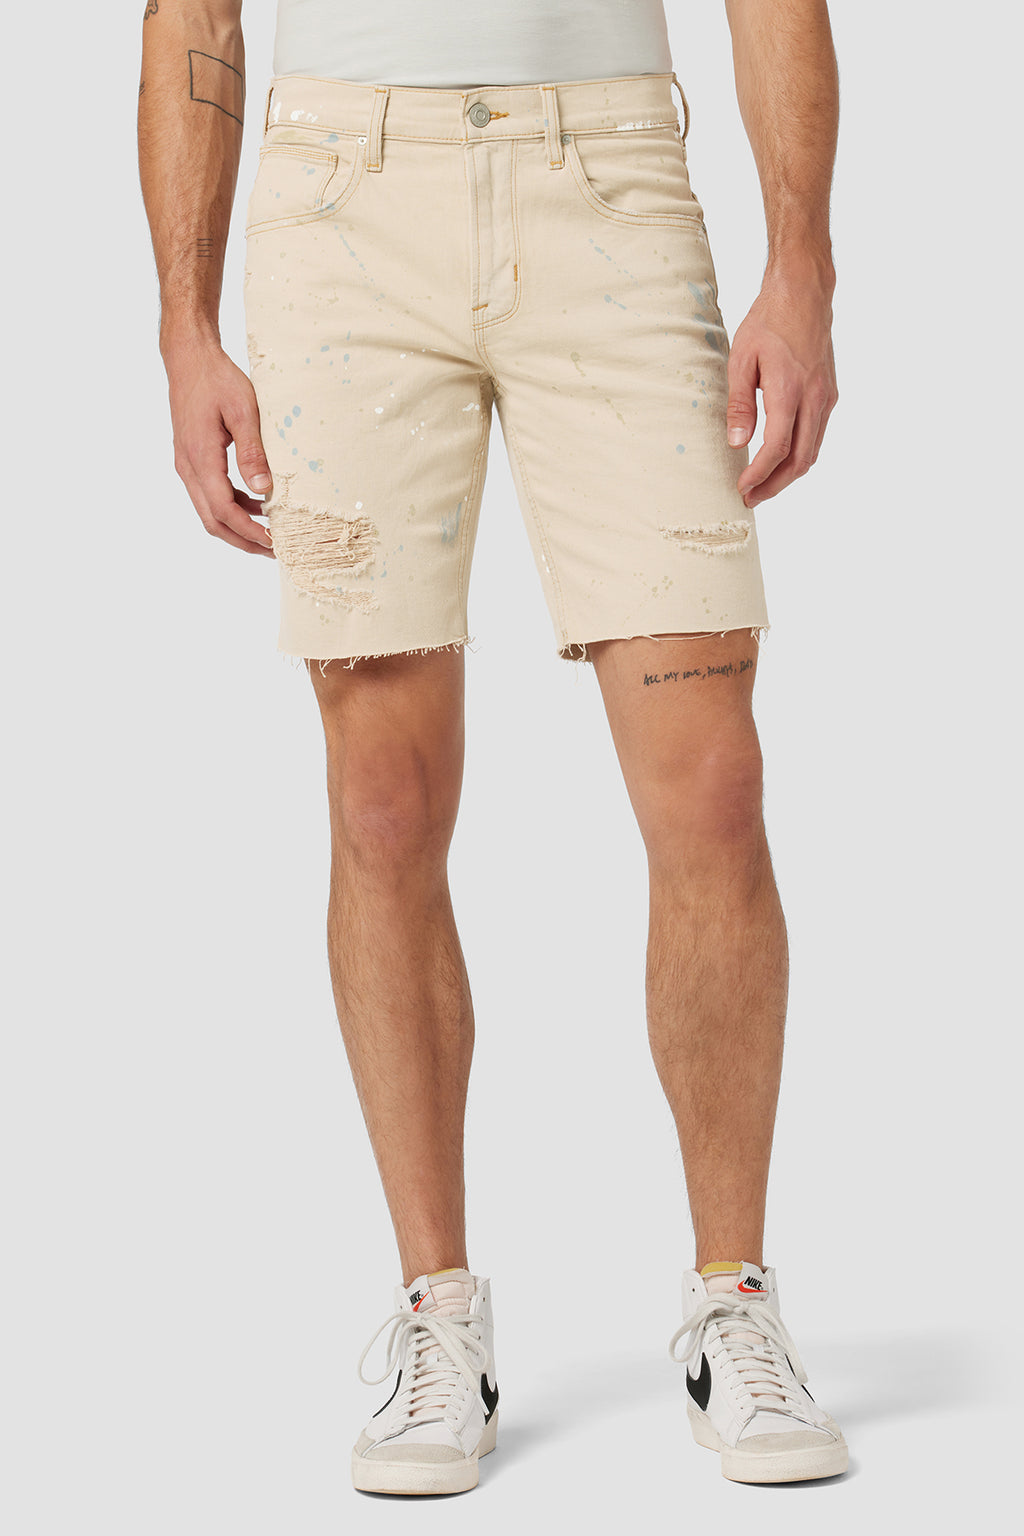 Shop Men's Shorts at Hudson Jeans